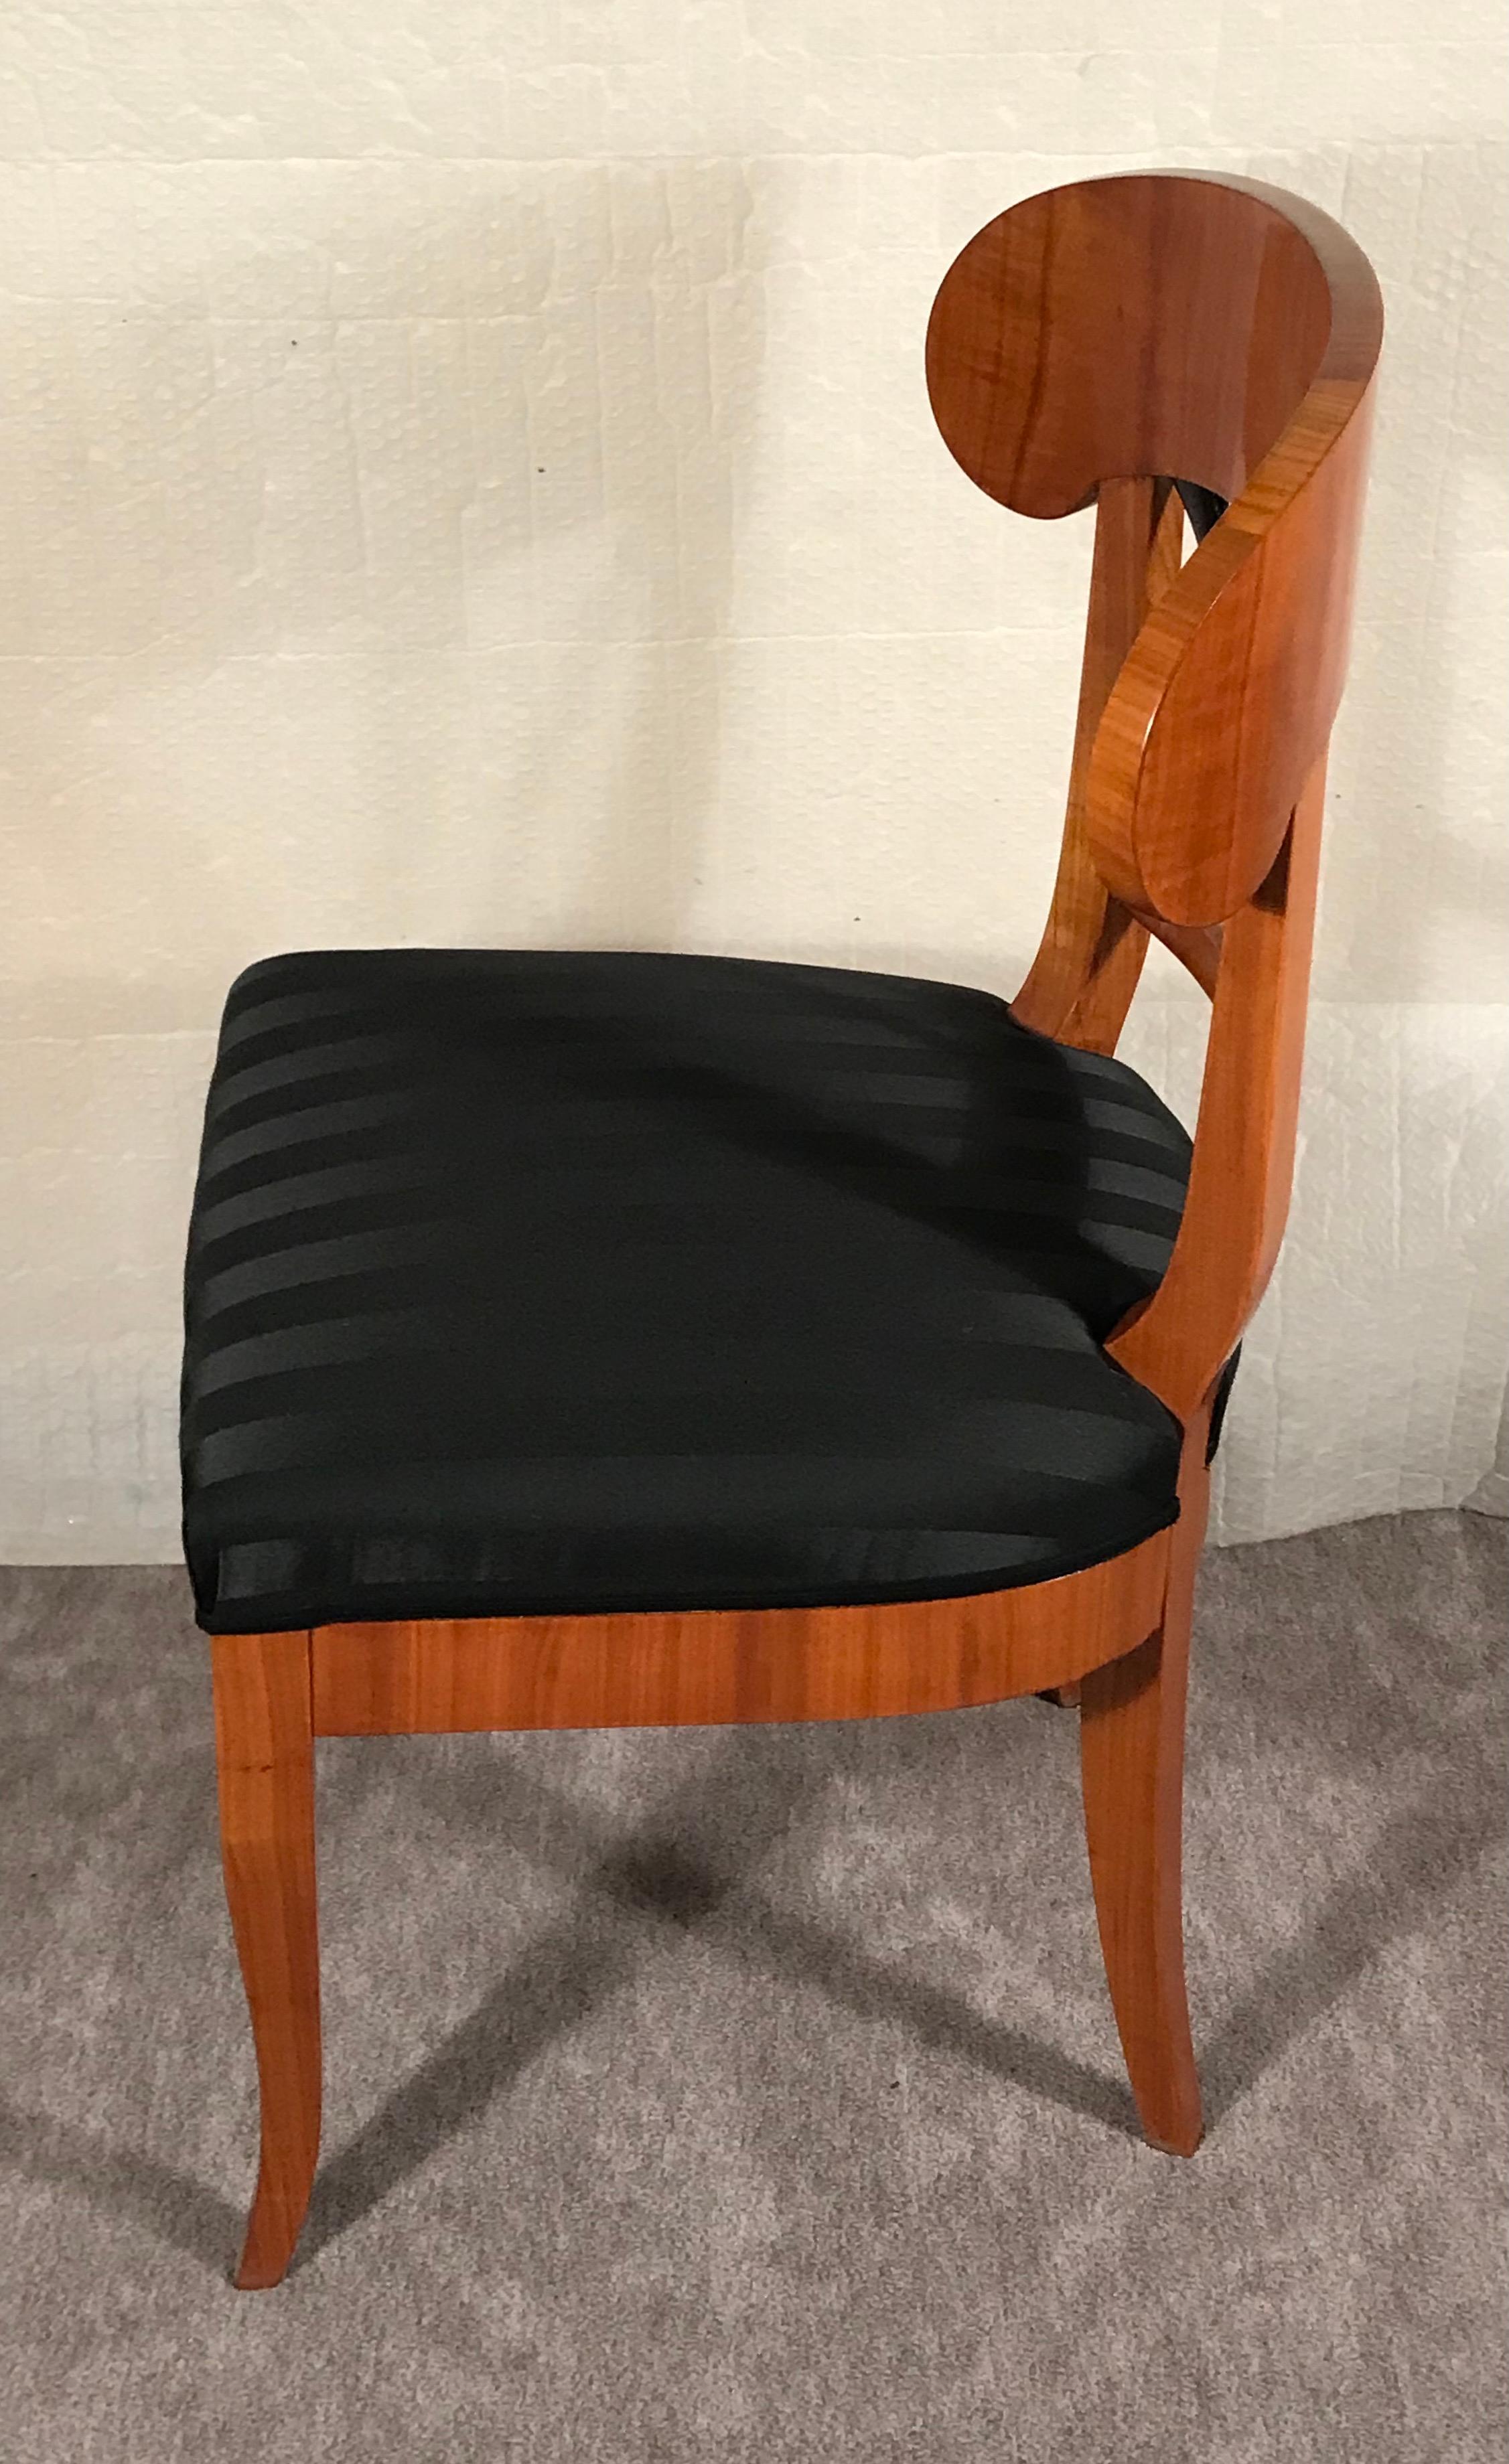 Biedermeier Chair, South German 1820, Cherry 1